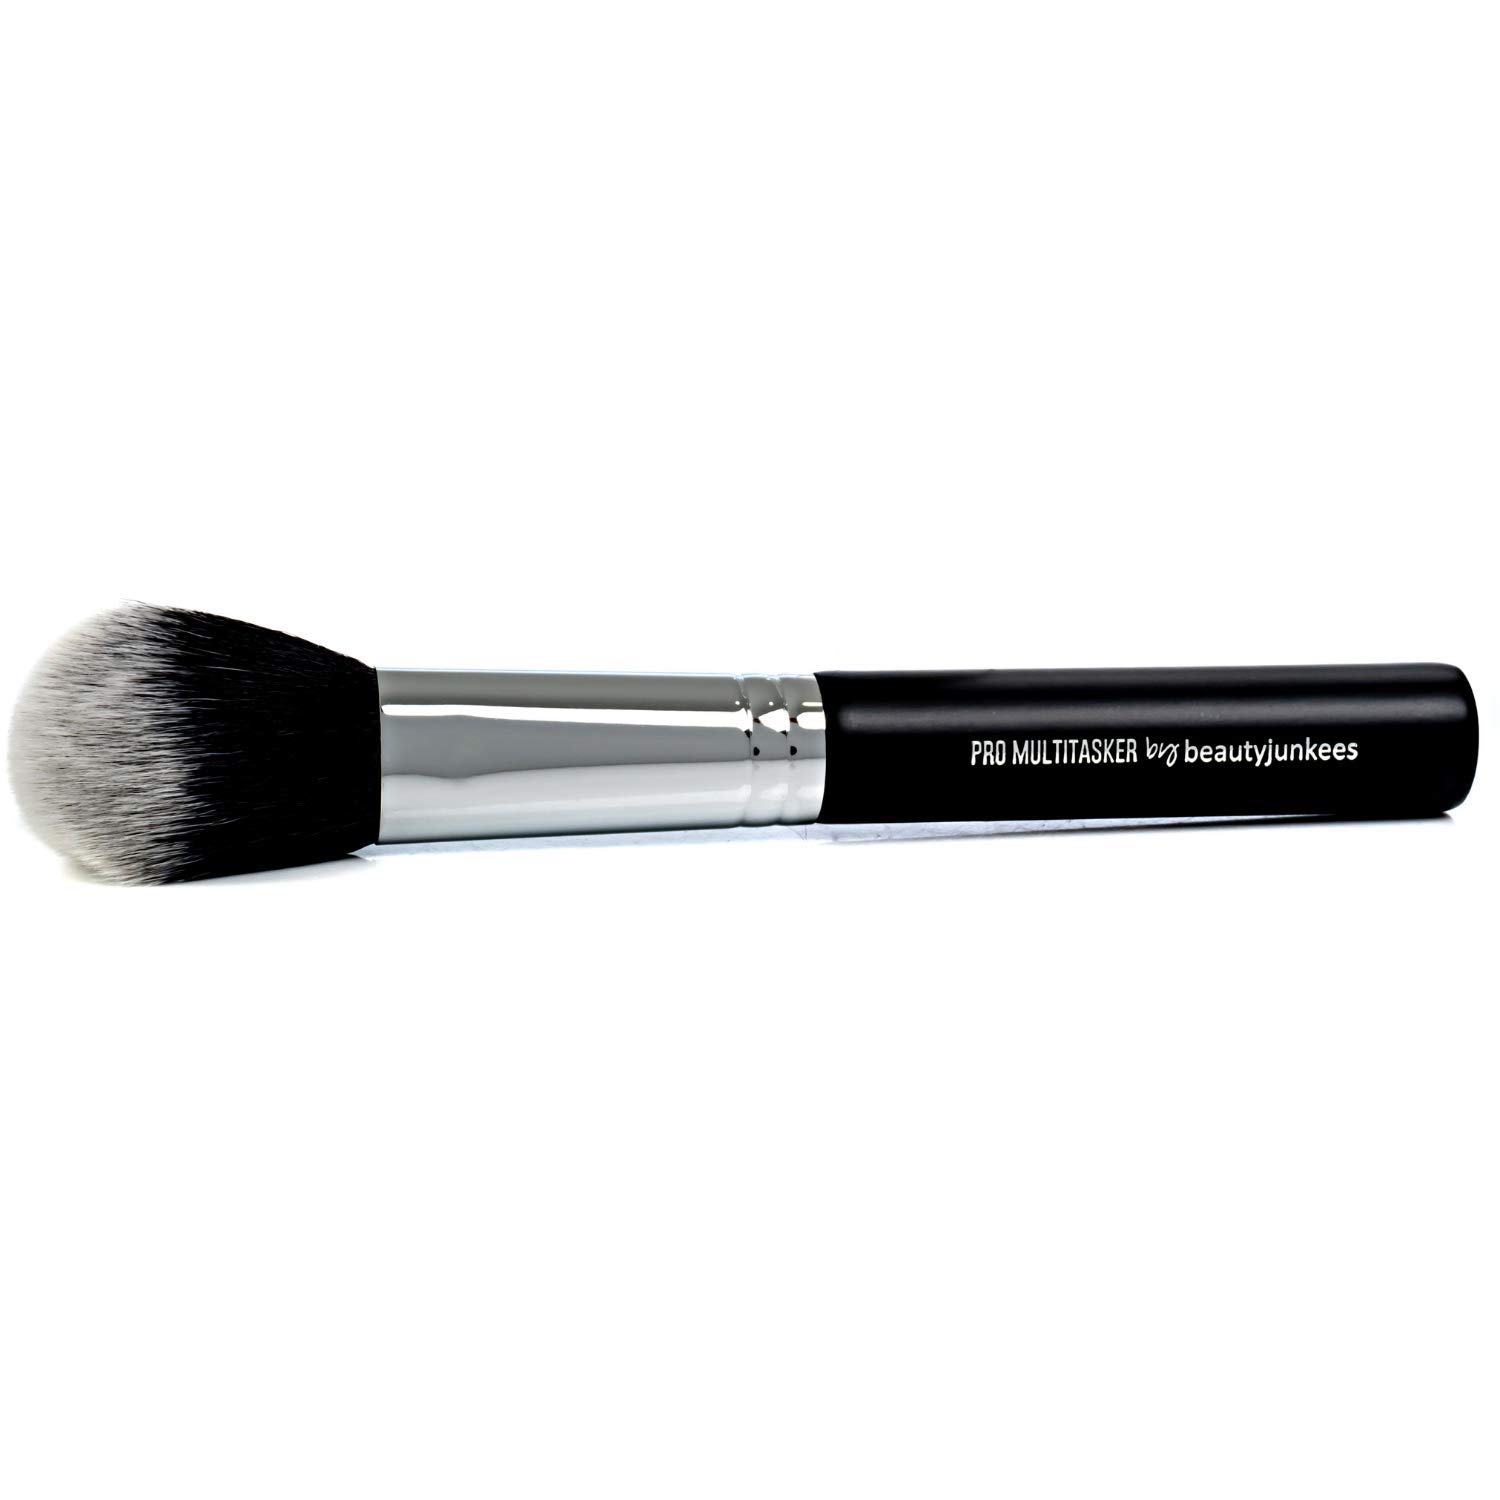 Powder Blush Bronzer Makeup Brush – Large Fluffy Domed Multitasker Make Up Brushes, Cheek Blusher, Contour, Blending, Setting Loose, Compact, Translucent, Minerals, Soft Synthetic Vegan Cruelty Free